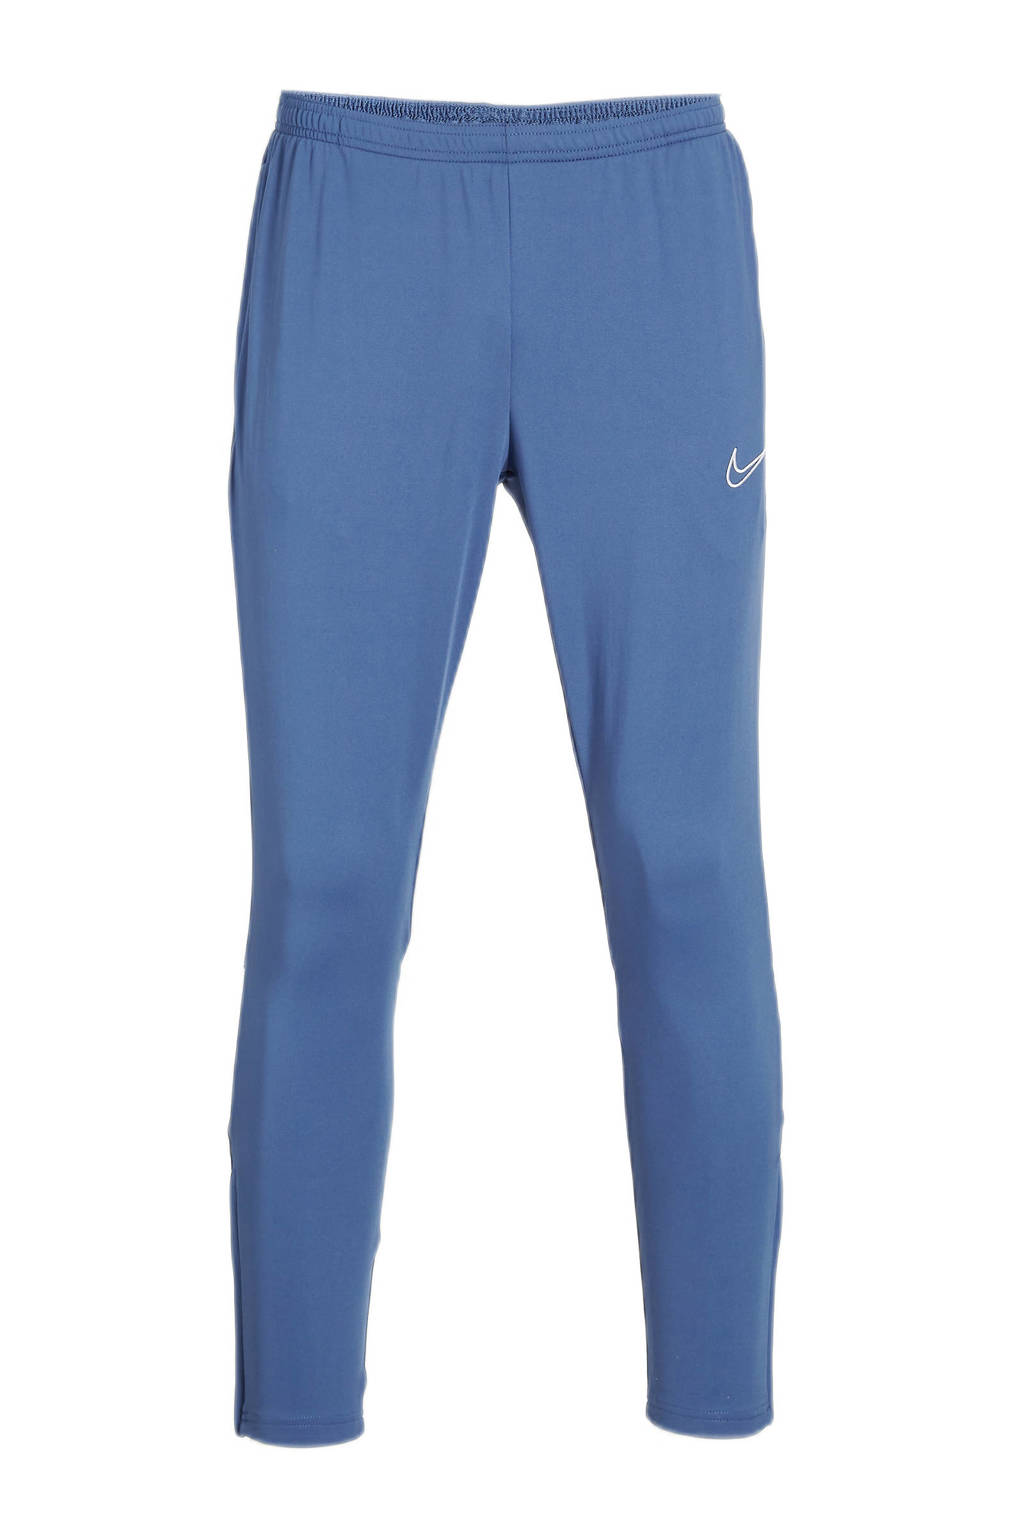 Nike Senior  trainingsbroek blauw/wit